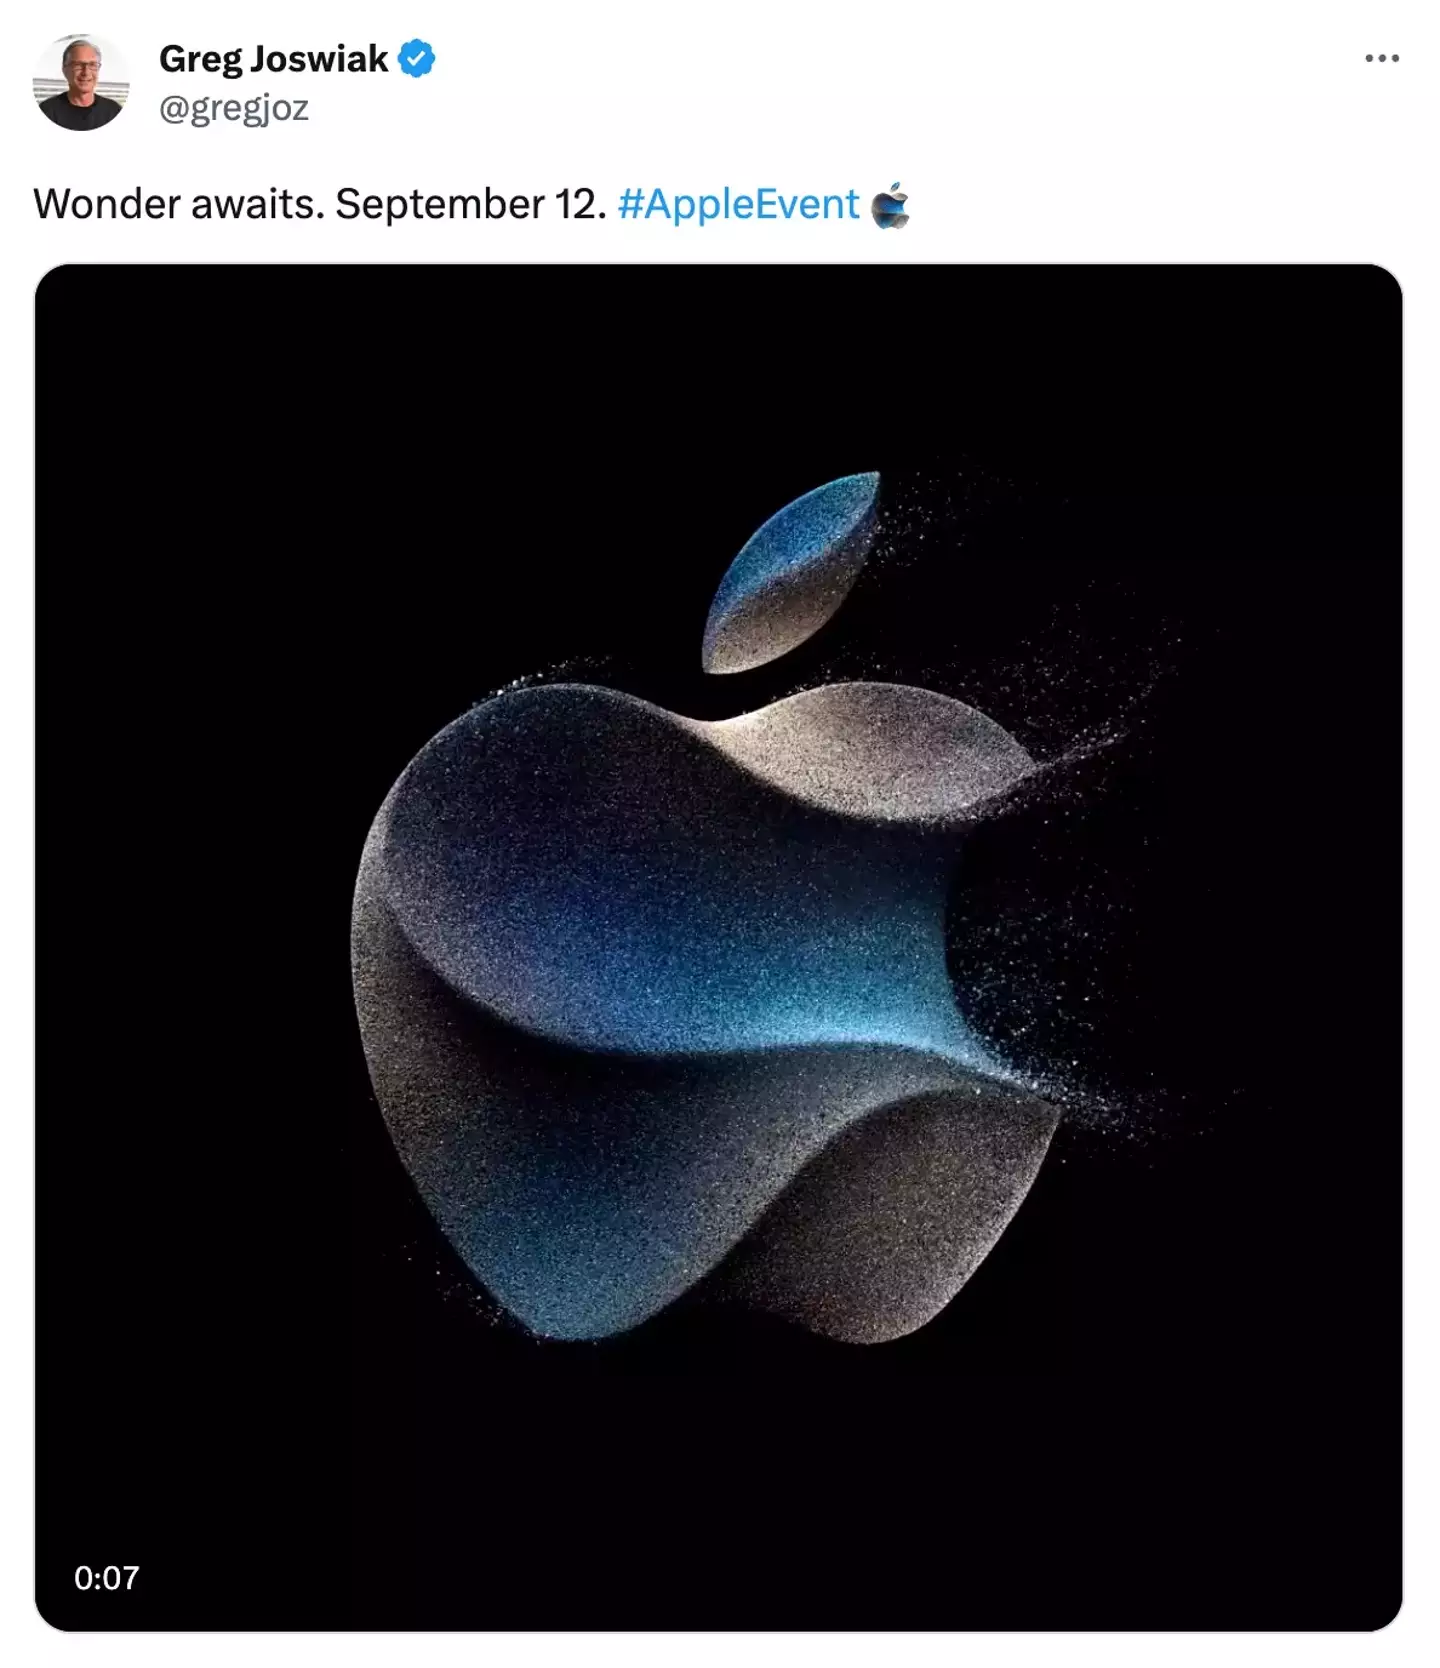 Apple's next big event, titled Wonderlust, will happen on September 12.